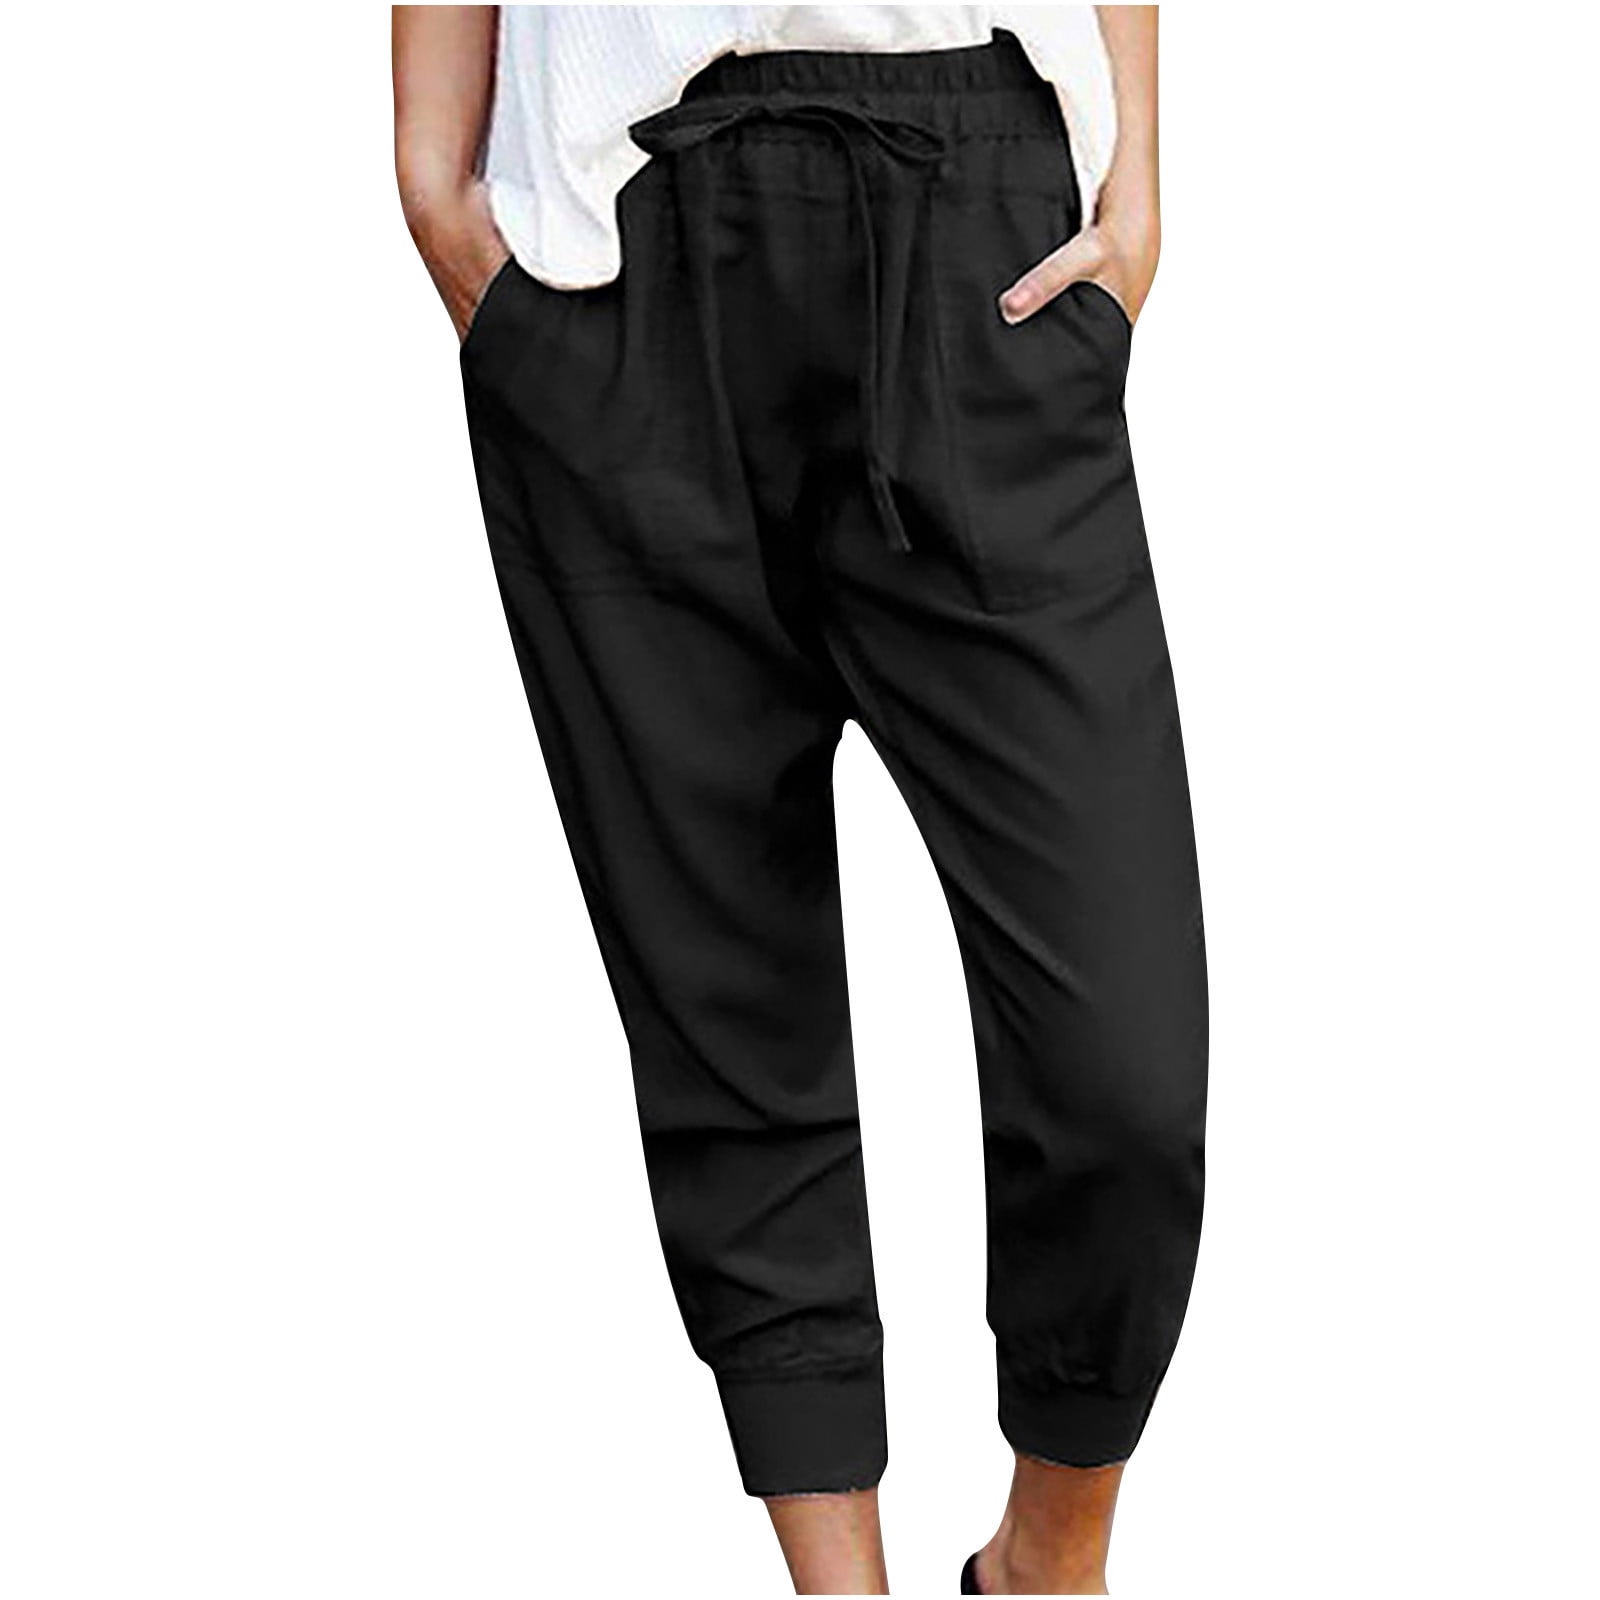 Mrat Full Length Pants Pencil Pants for Work Ladies Casual Solid